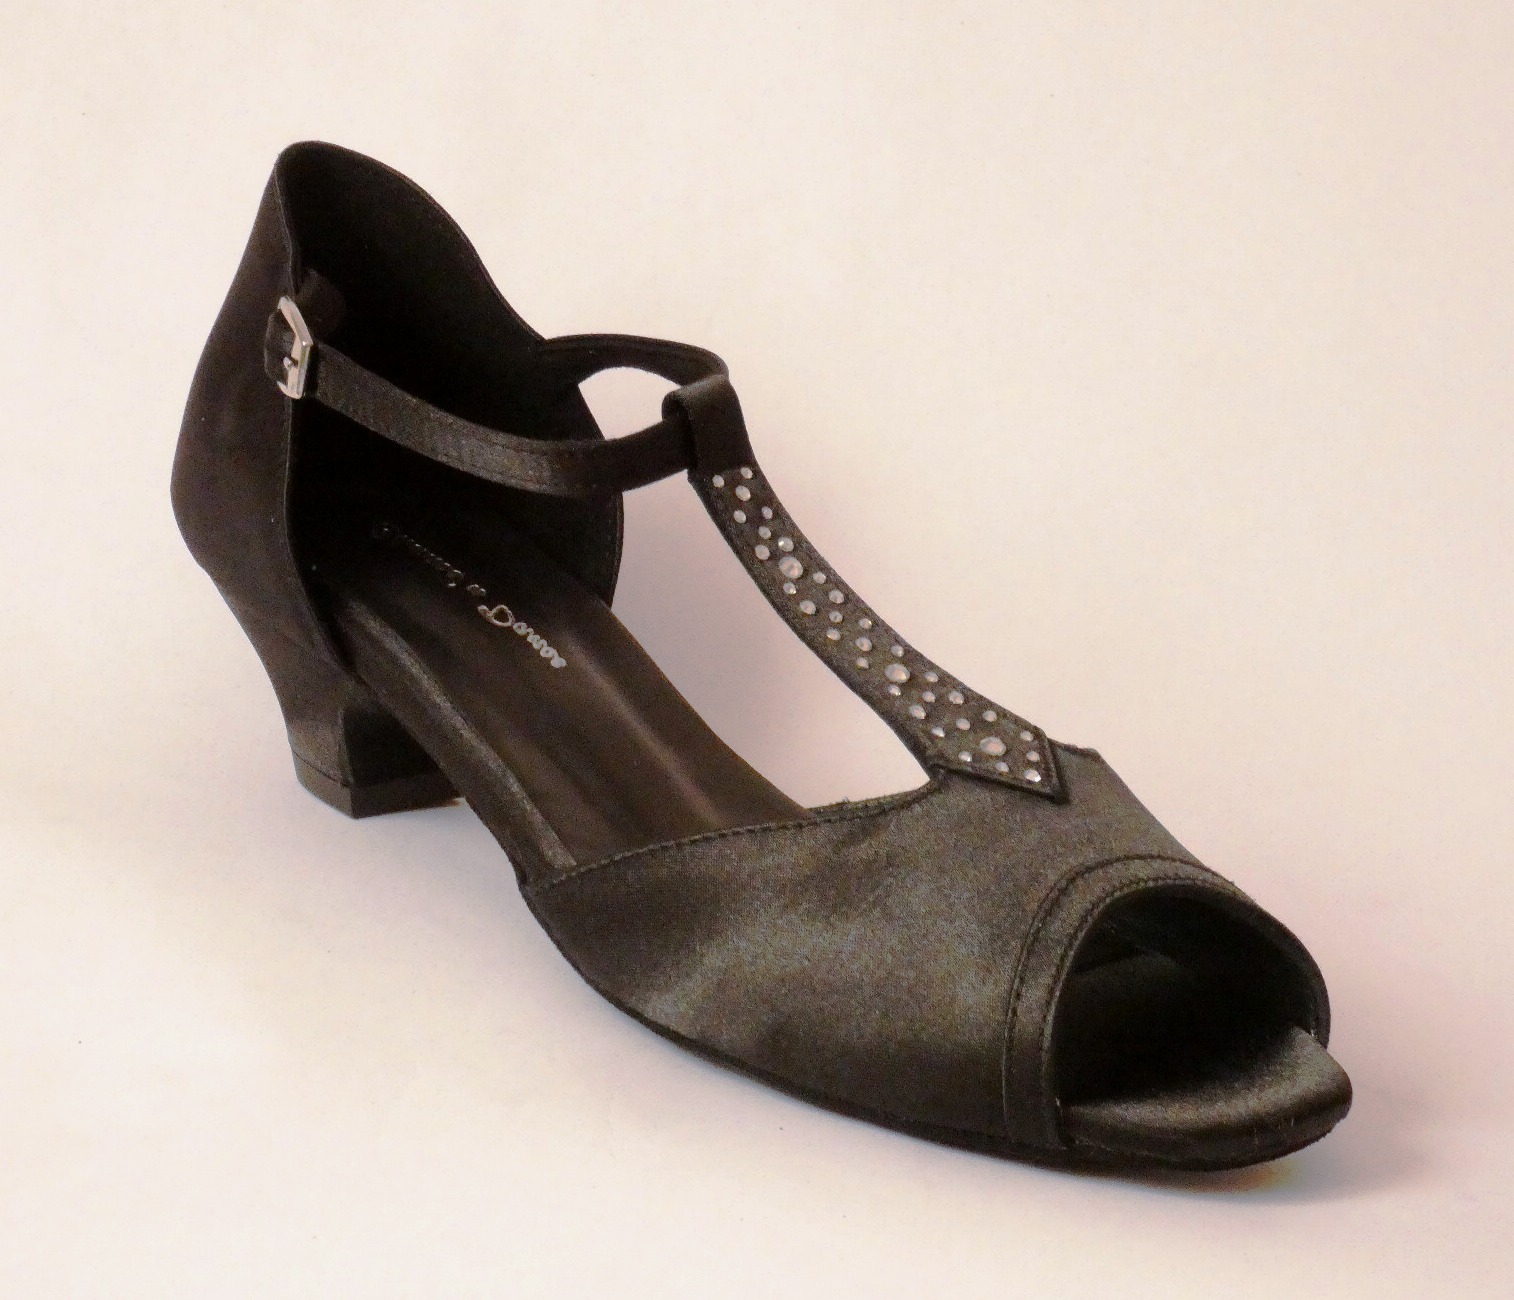 Chaussures de danse femme SERENA NERA satin noir et strass Talon 3ccm